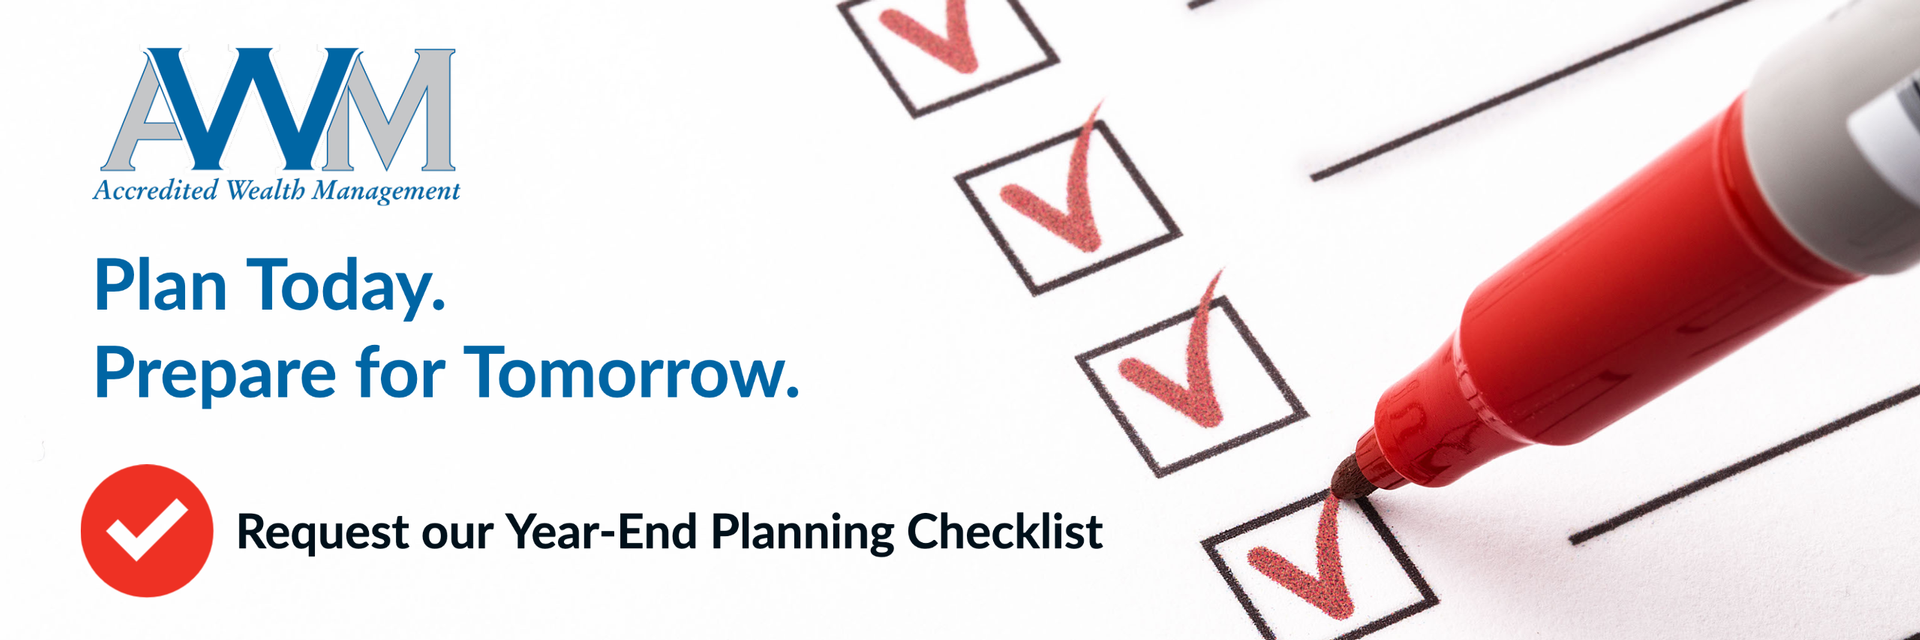 Accredited Wealth Management Year End Planning Checklist